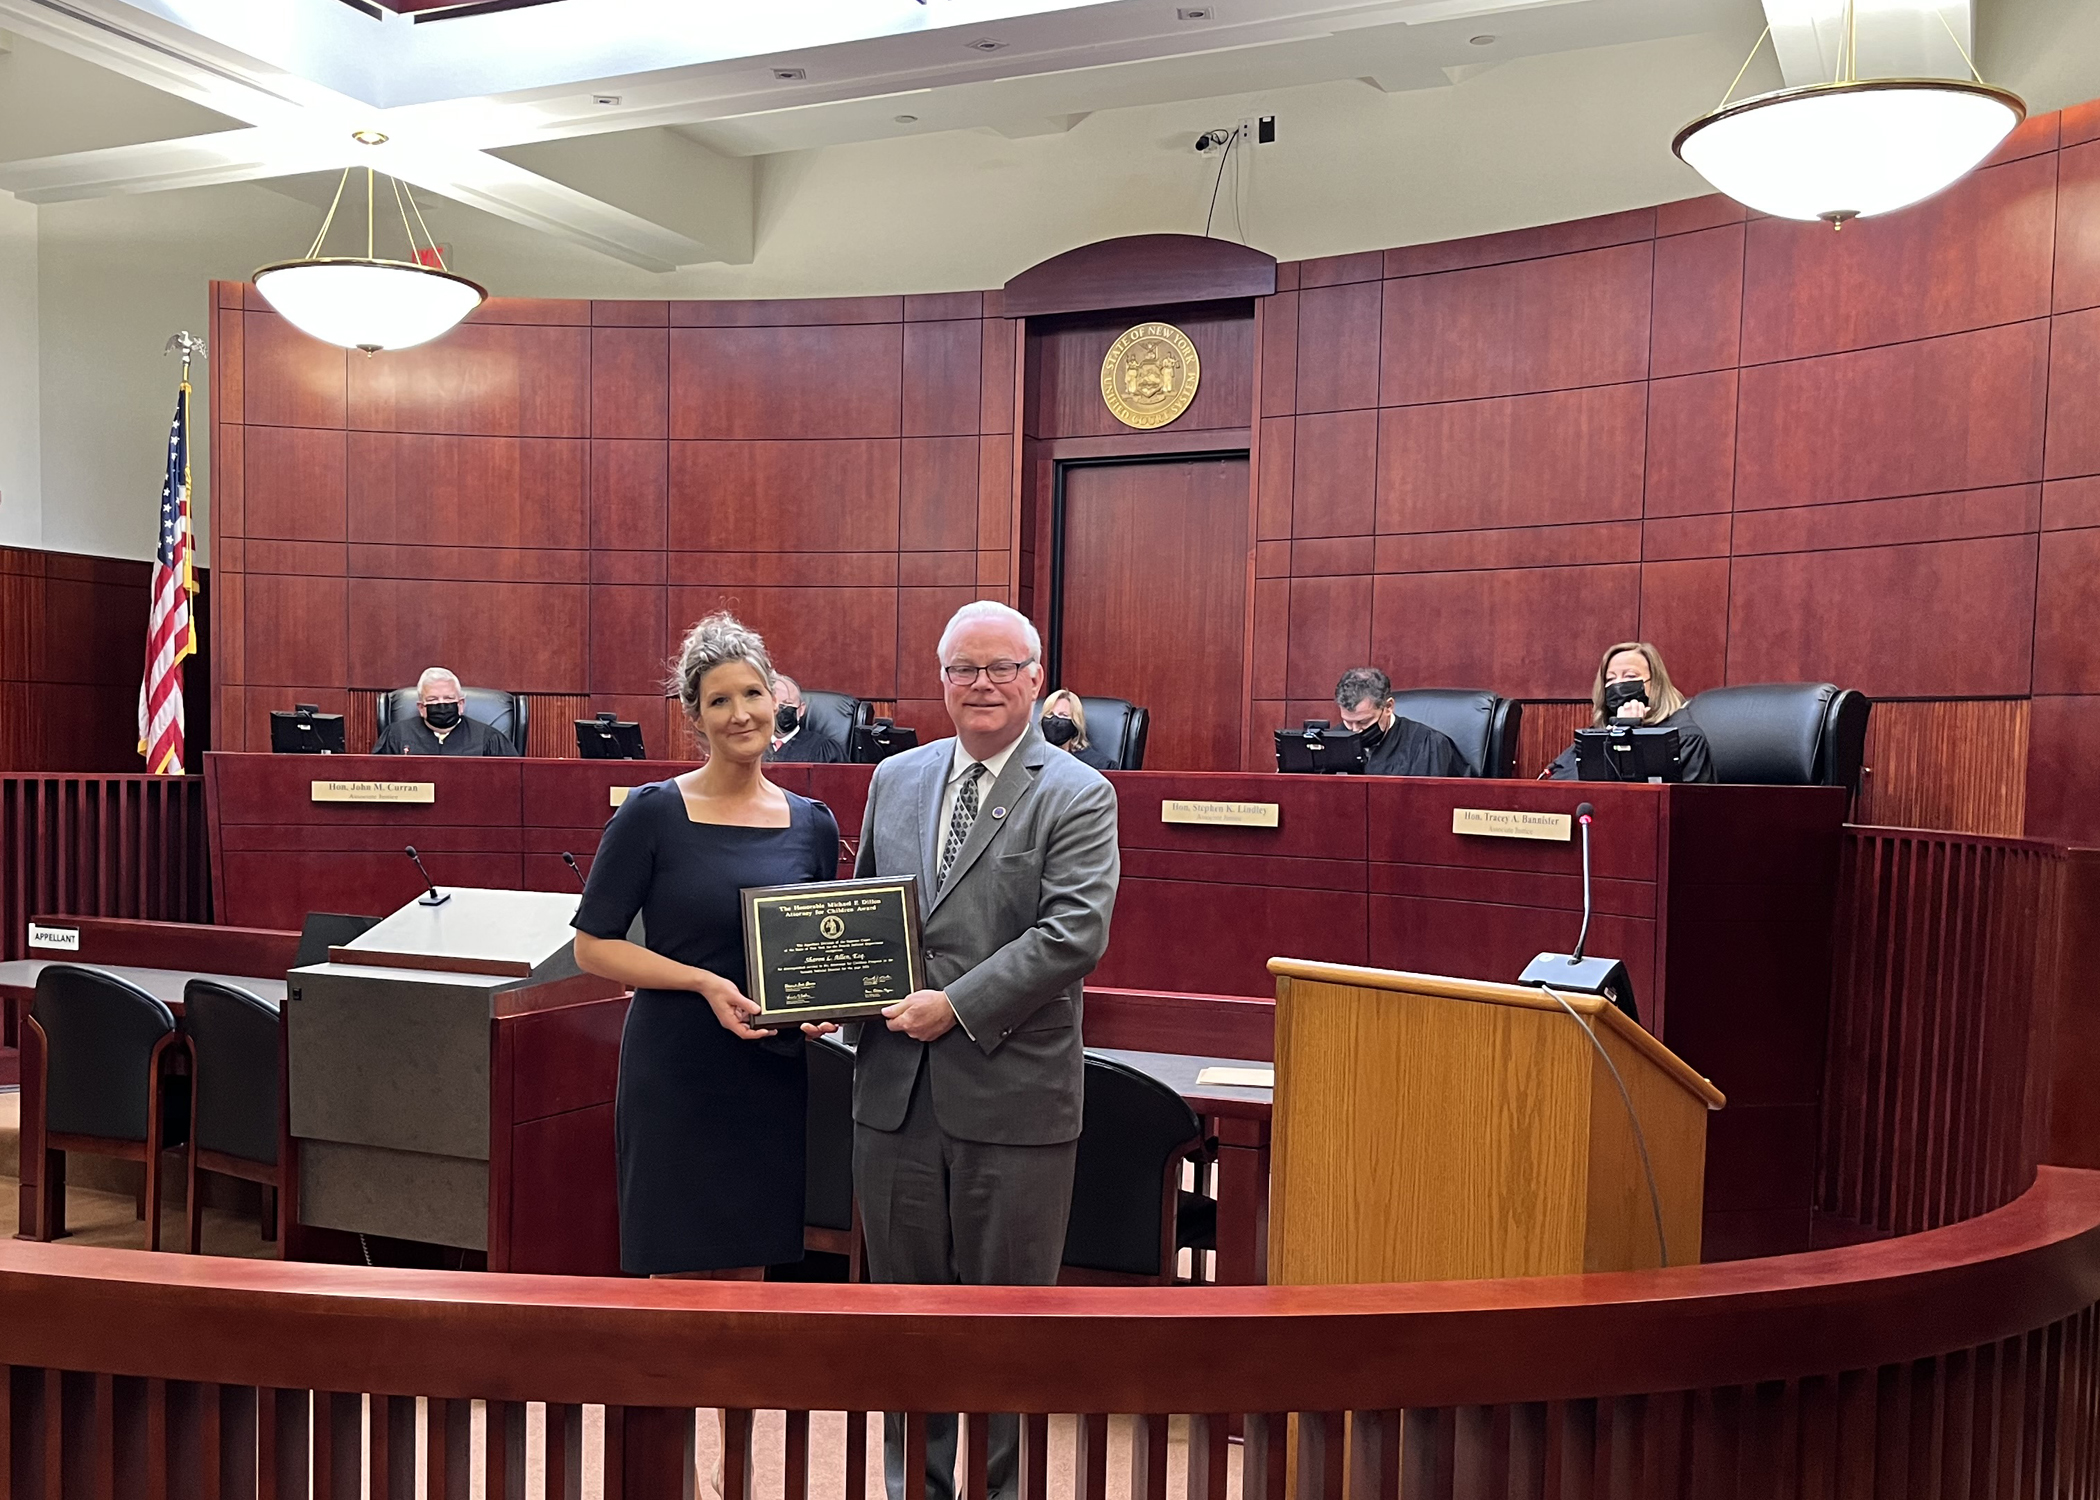 Sharon L. Allen Receives Award